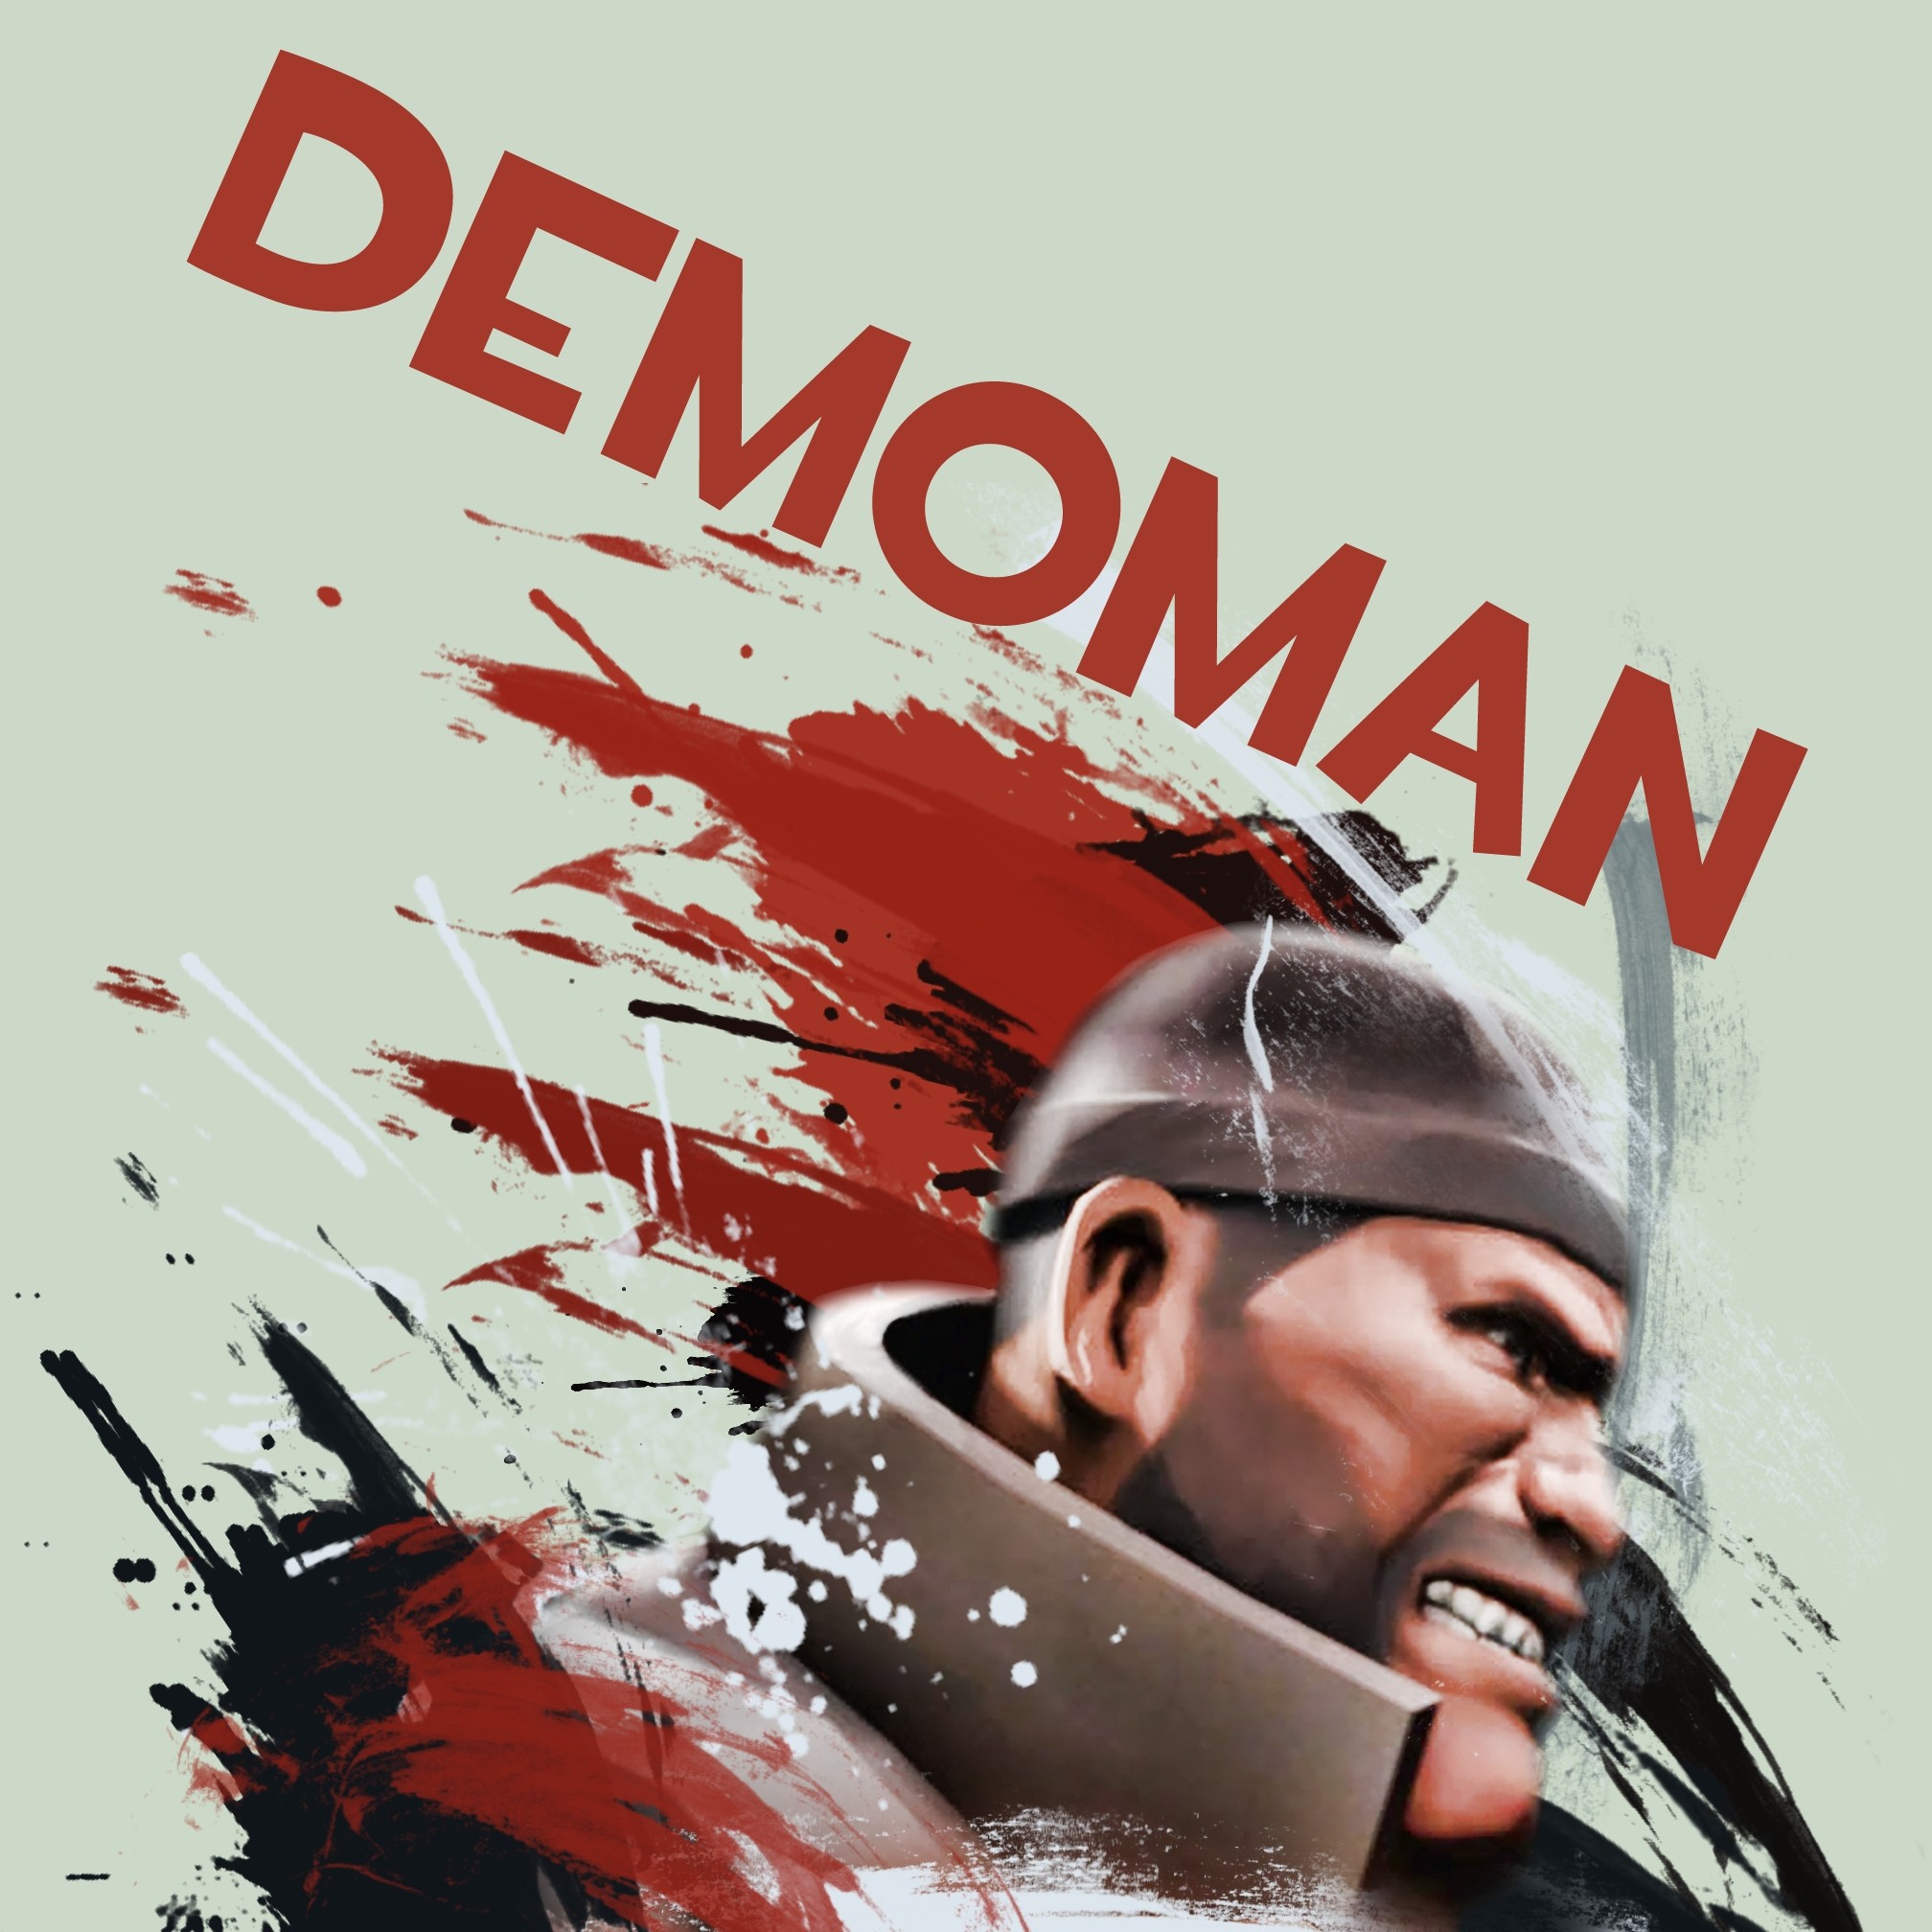 2016x2016 ... Demoman TF2, Team Fortress 2 - related desktop wallpaper ...